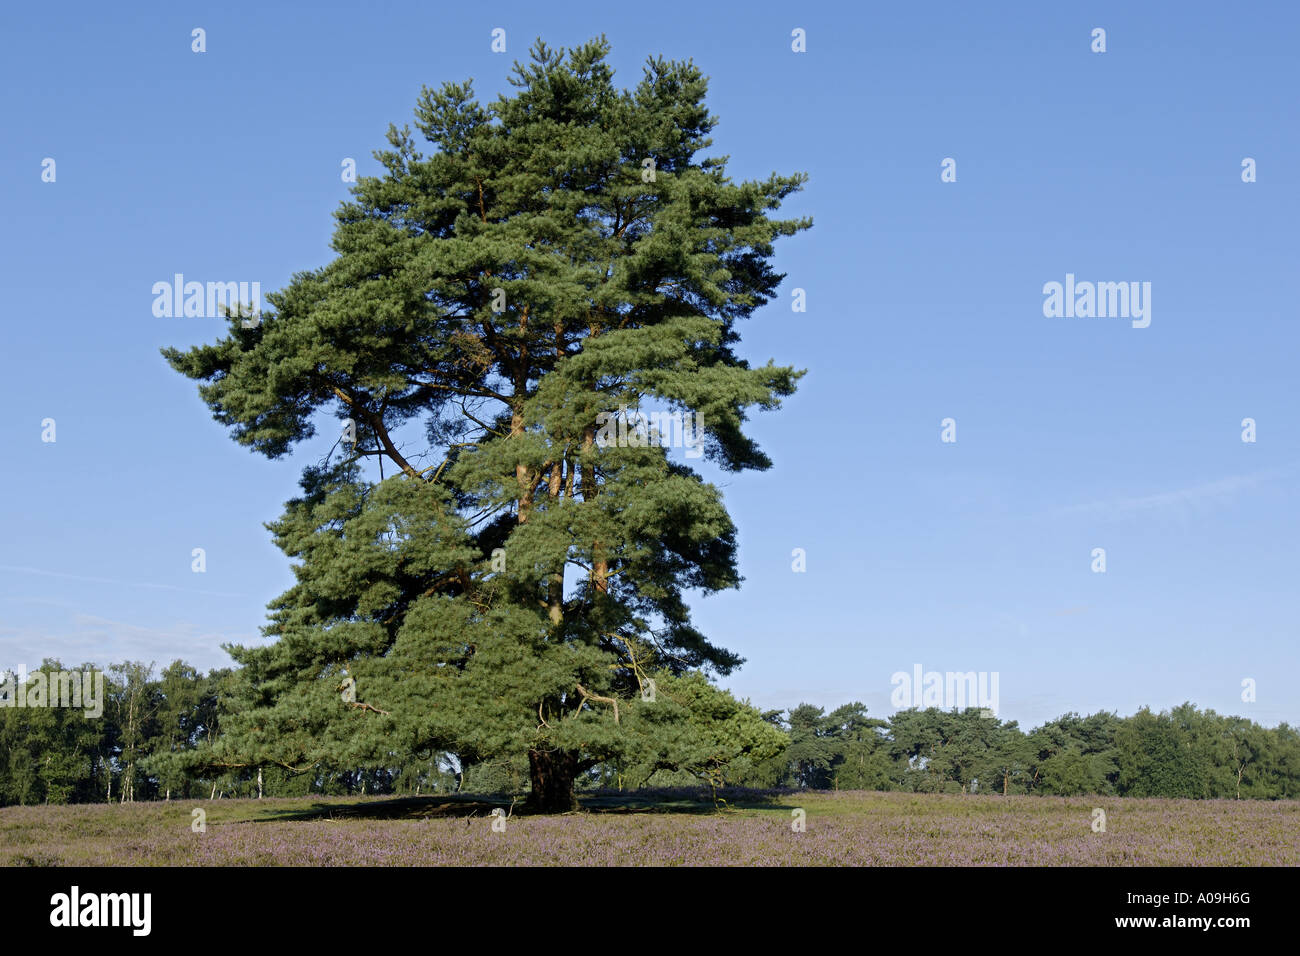 Scotch pine, scots pine (Pinus sylvestris), single tree with flowering heath, Calluna vulgaris, Germany, North Rhine-Westphalia Stock Photo